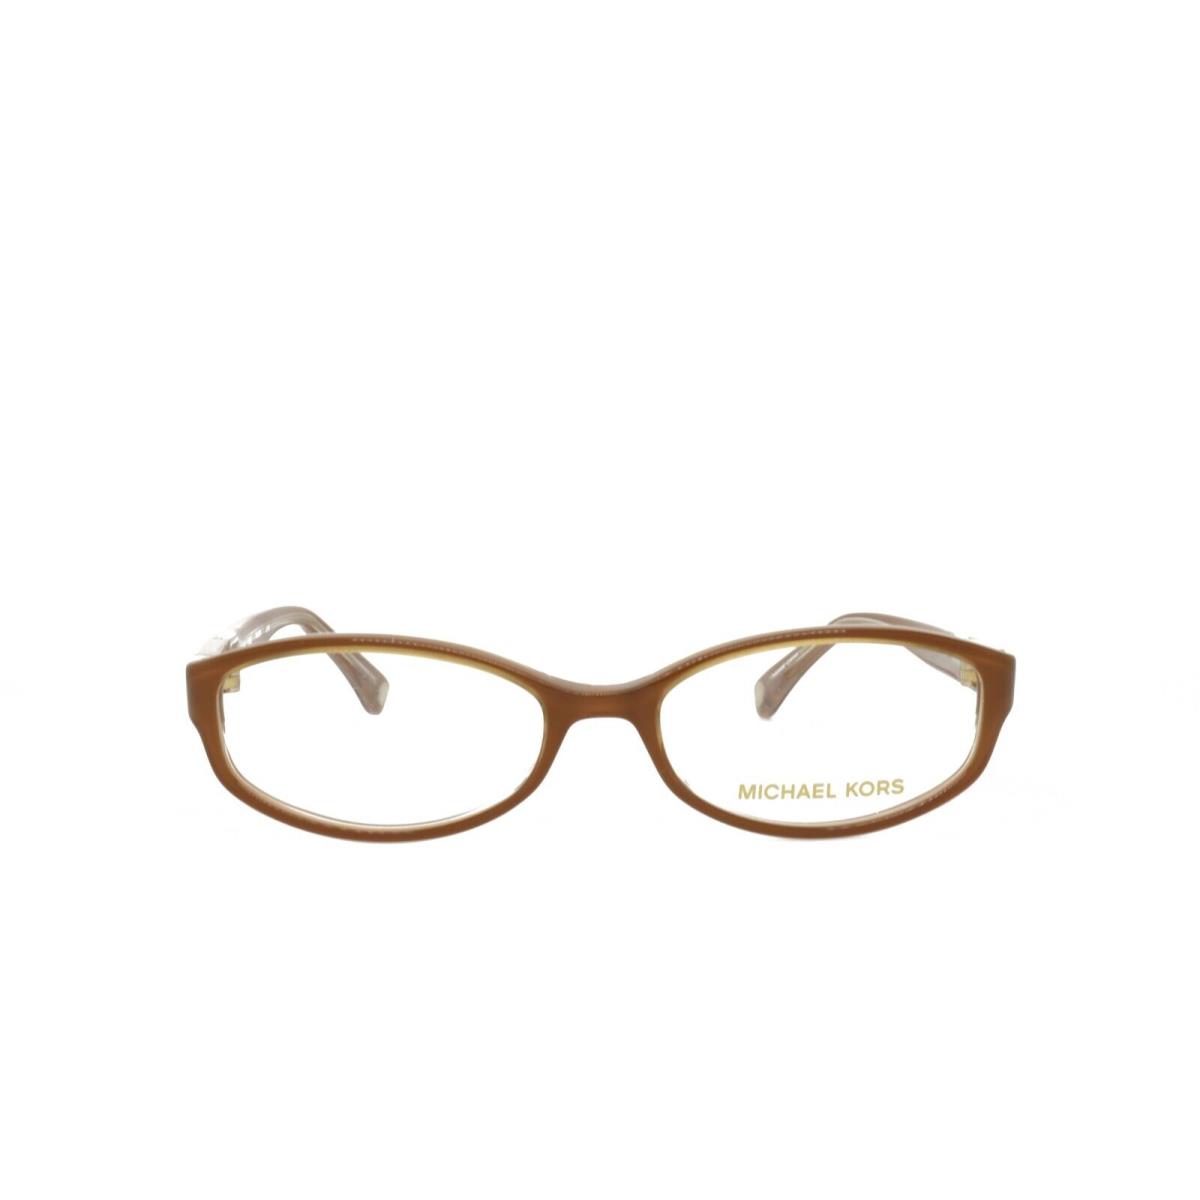 Michael Kors 259 248 52-17-135 Brown Eyeglasses Frames